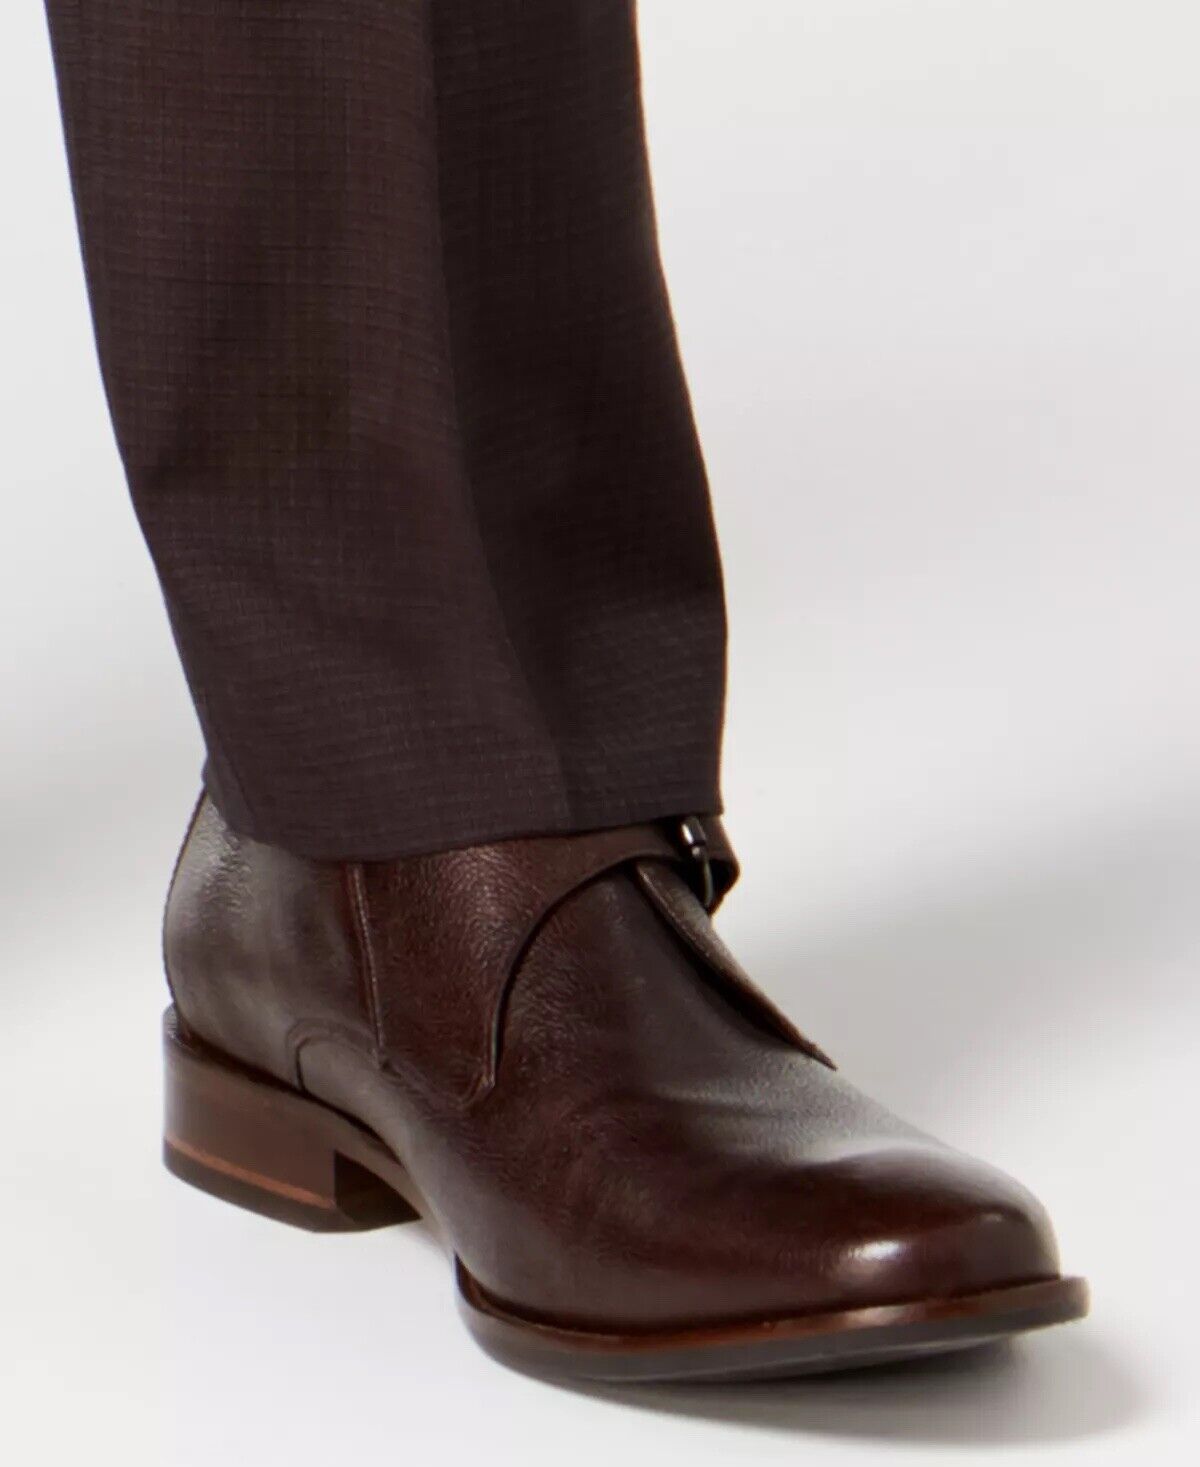 CALVIN KLEIN Men's Dress Pants Brown 38 x 29 Slim-Fit Plaid Check